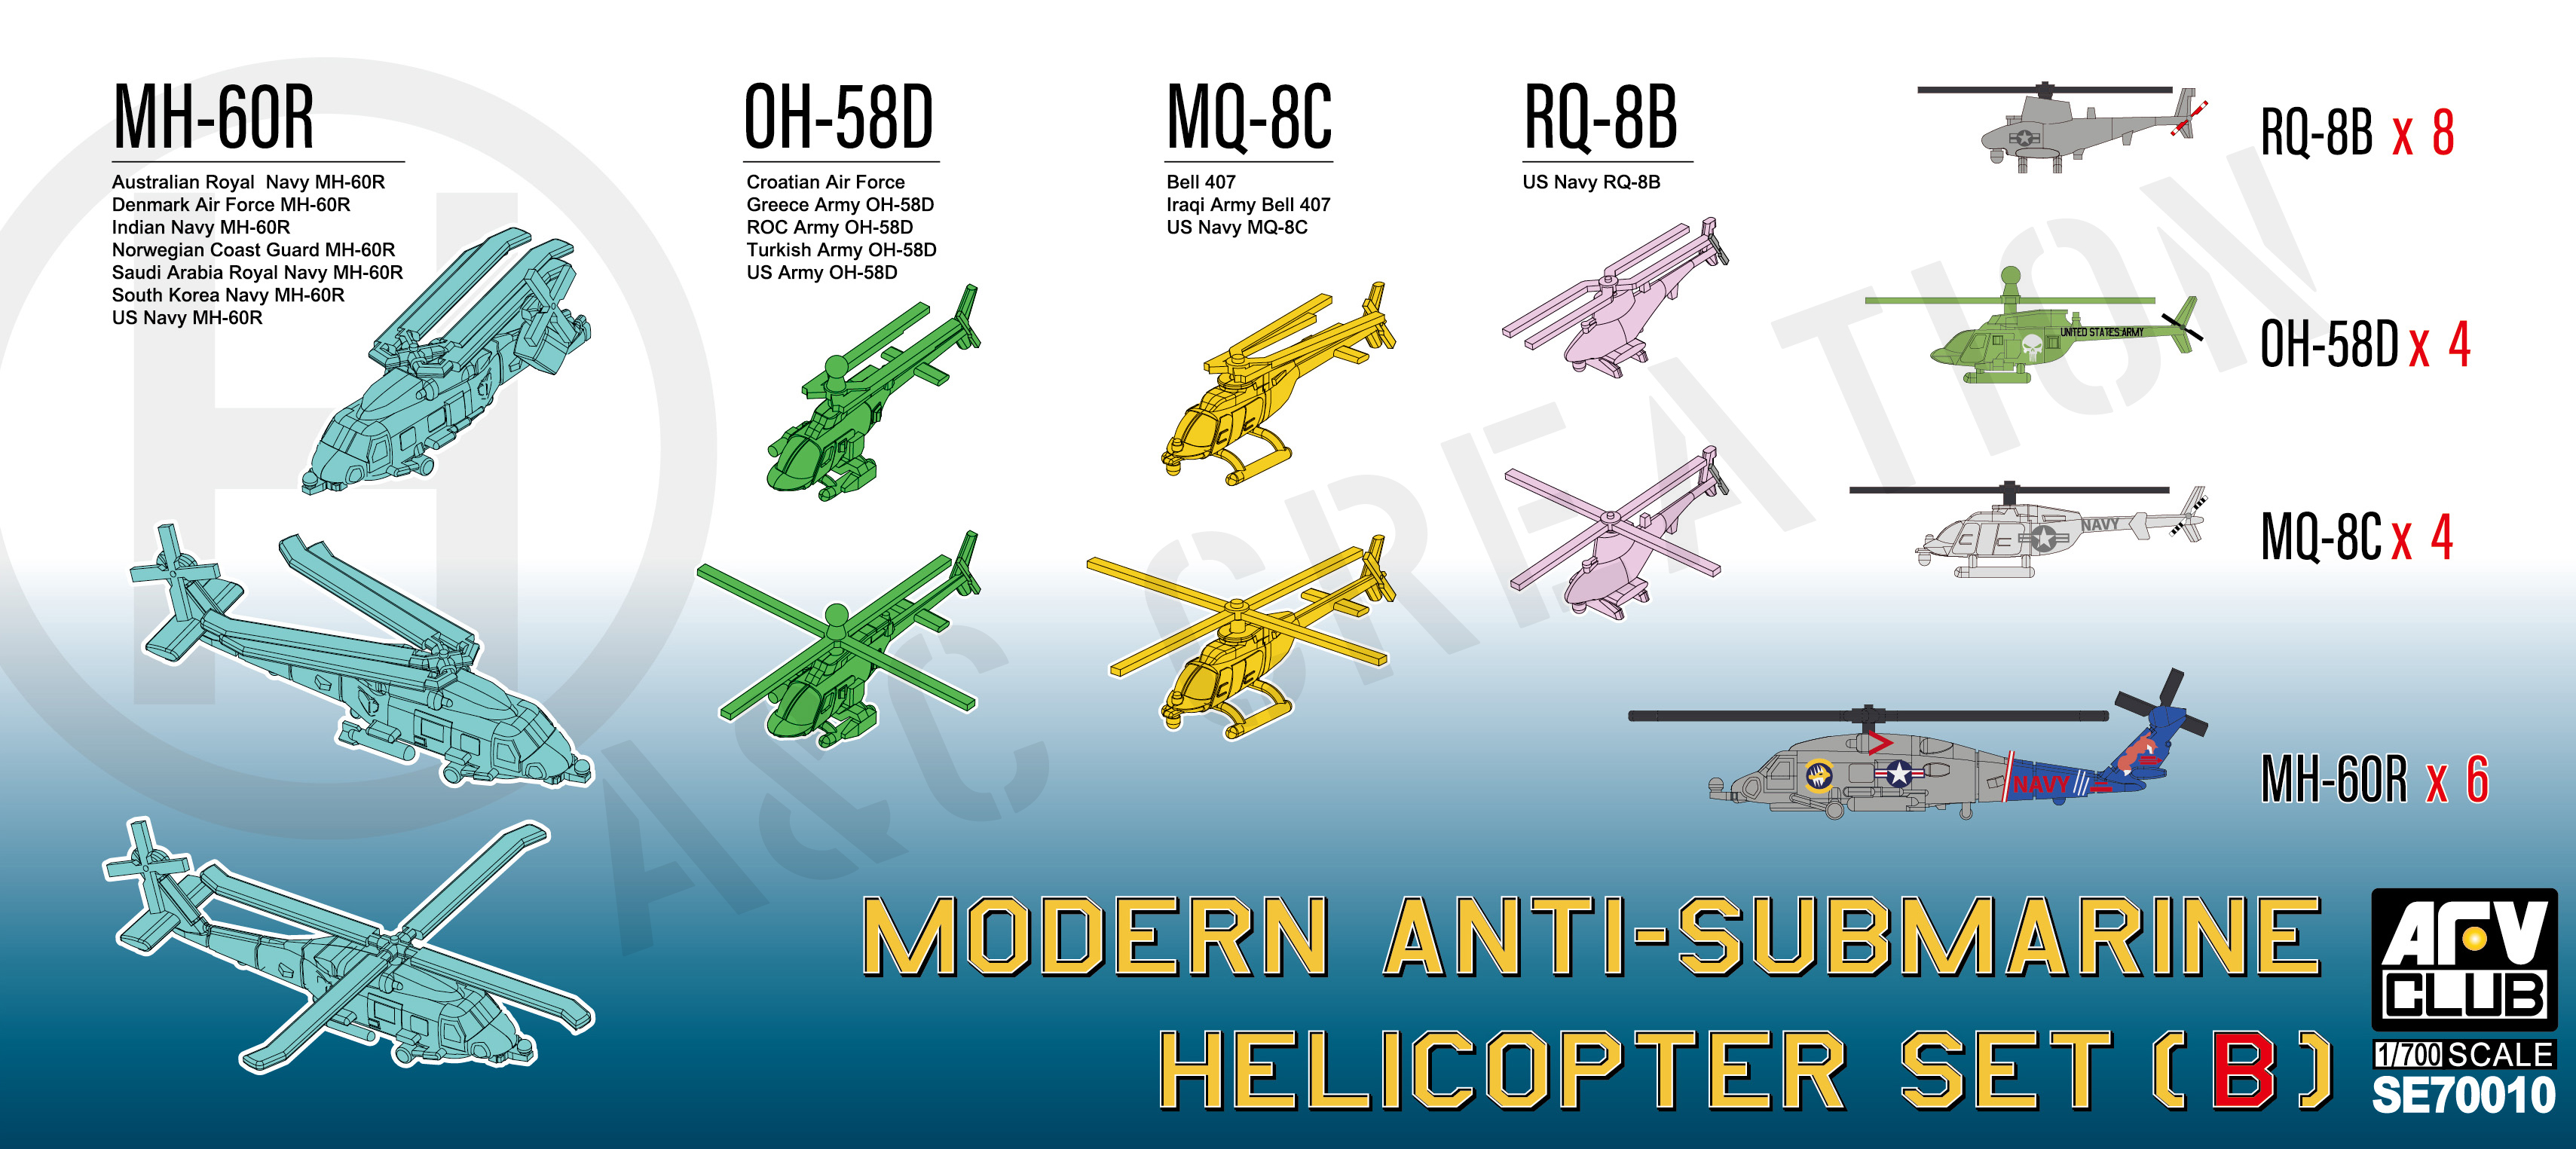 SE70010 Modern Anti-Submarine Helicopter Set (B)